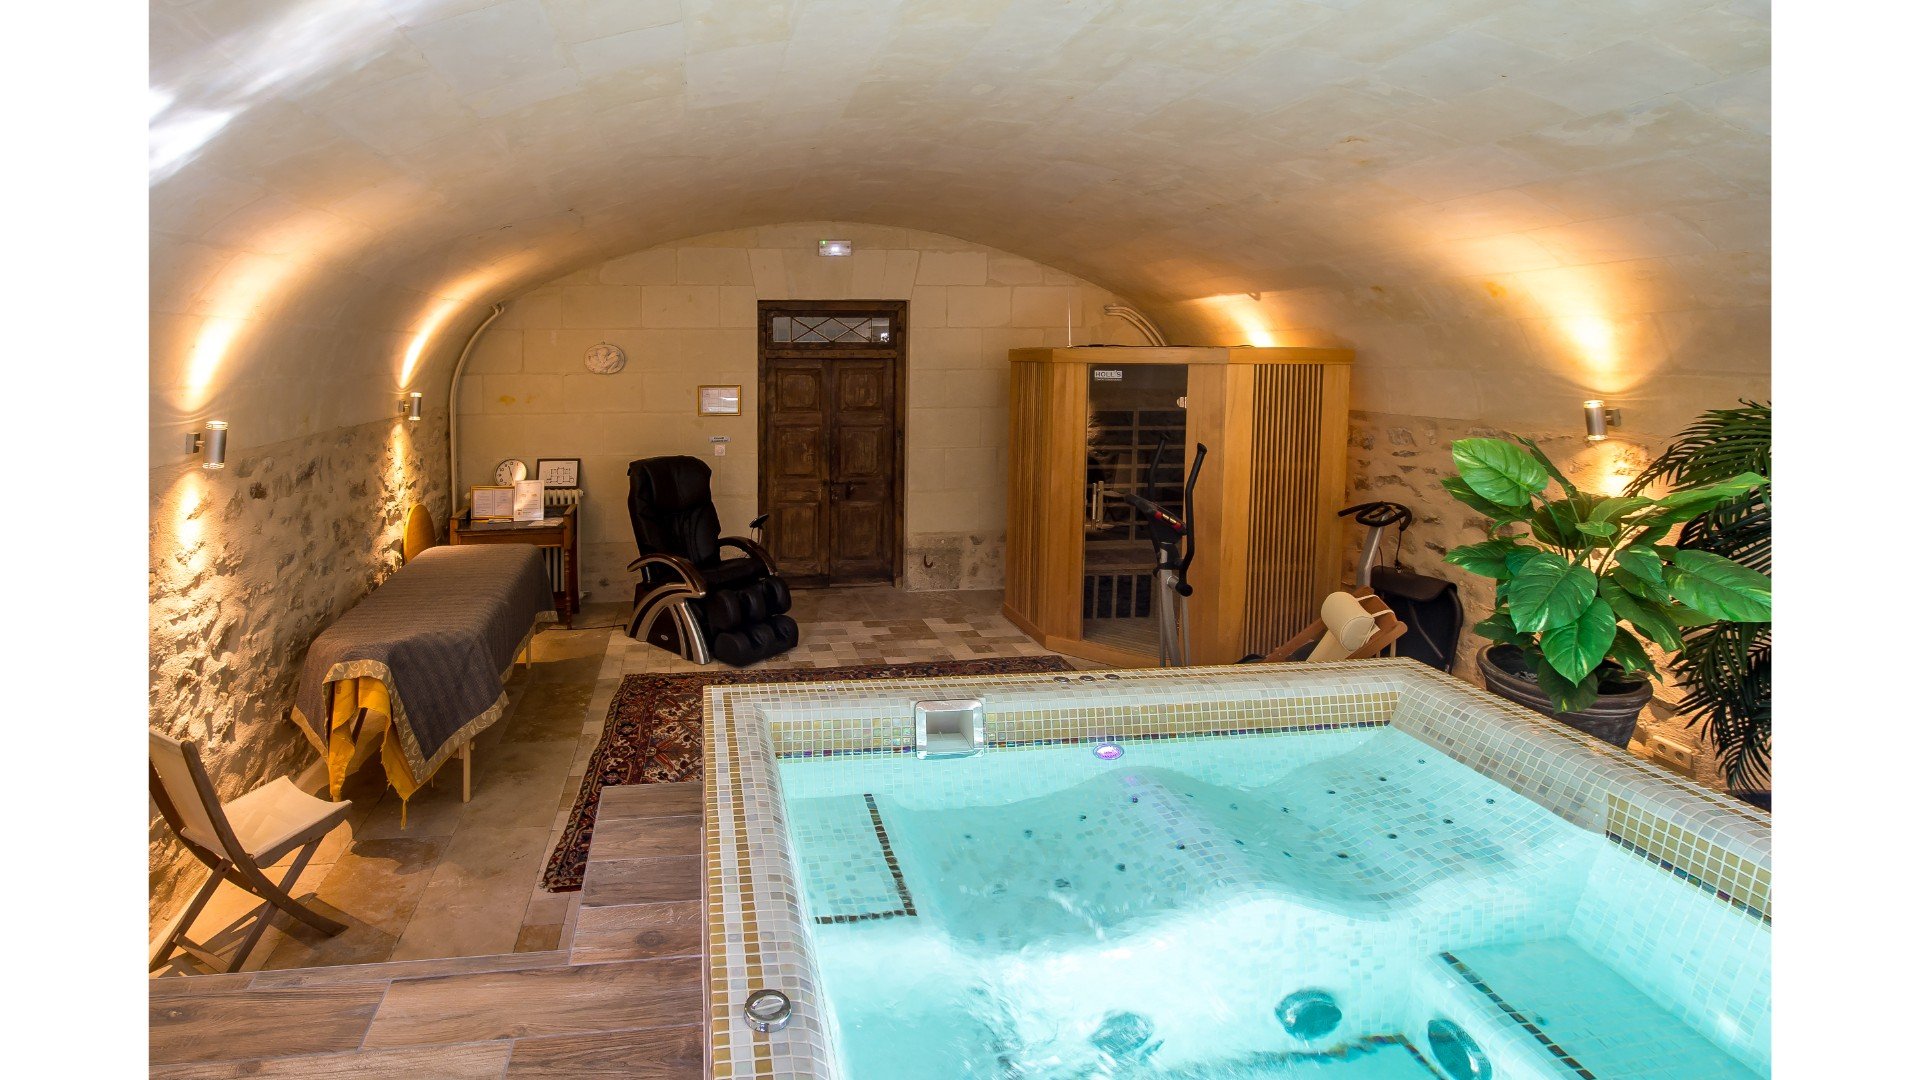 127/piscine  spa/Spa bain bouillonnant Chateau de Verrieres.jpg